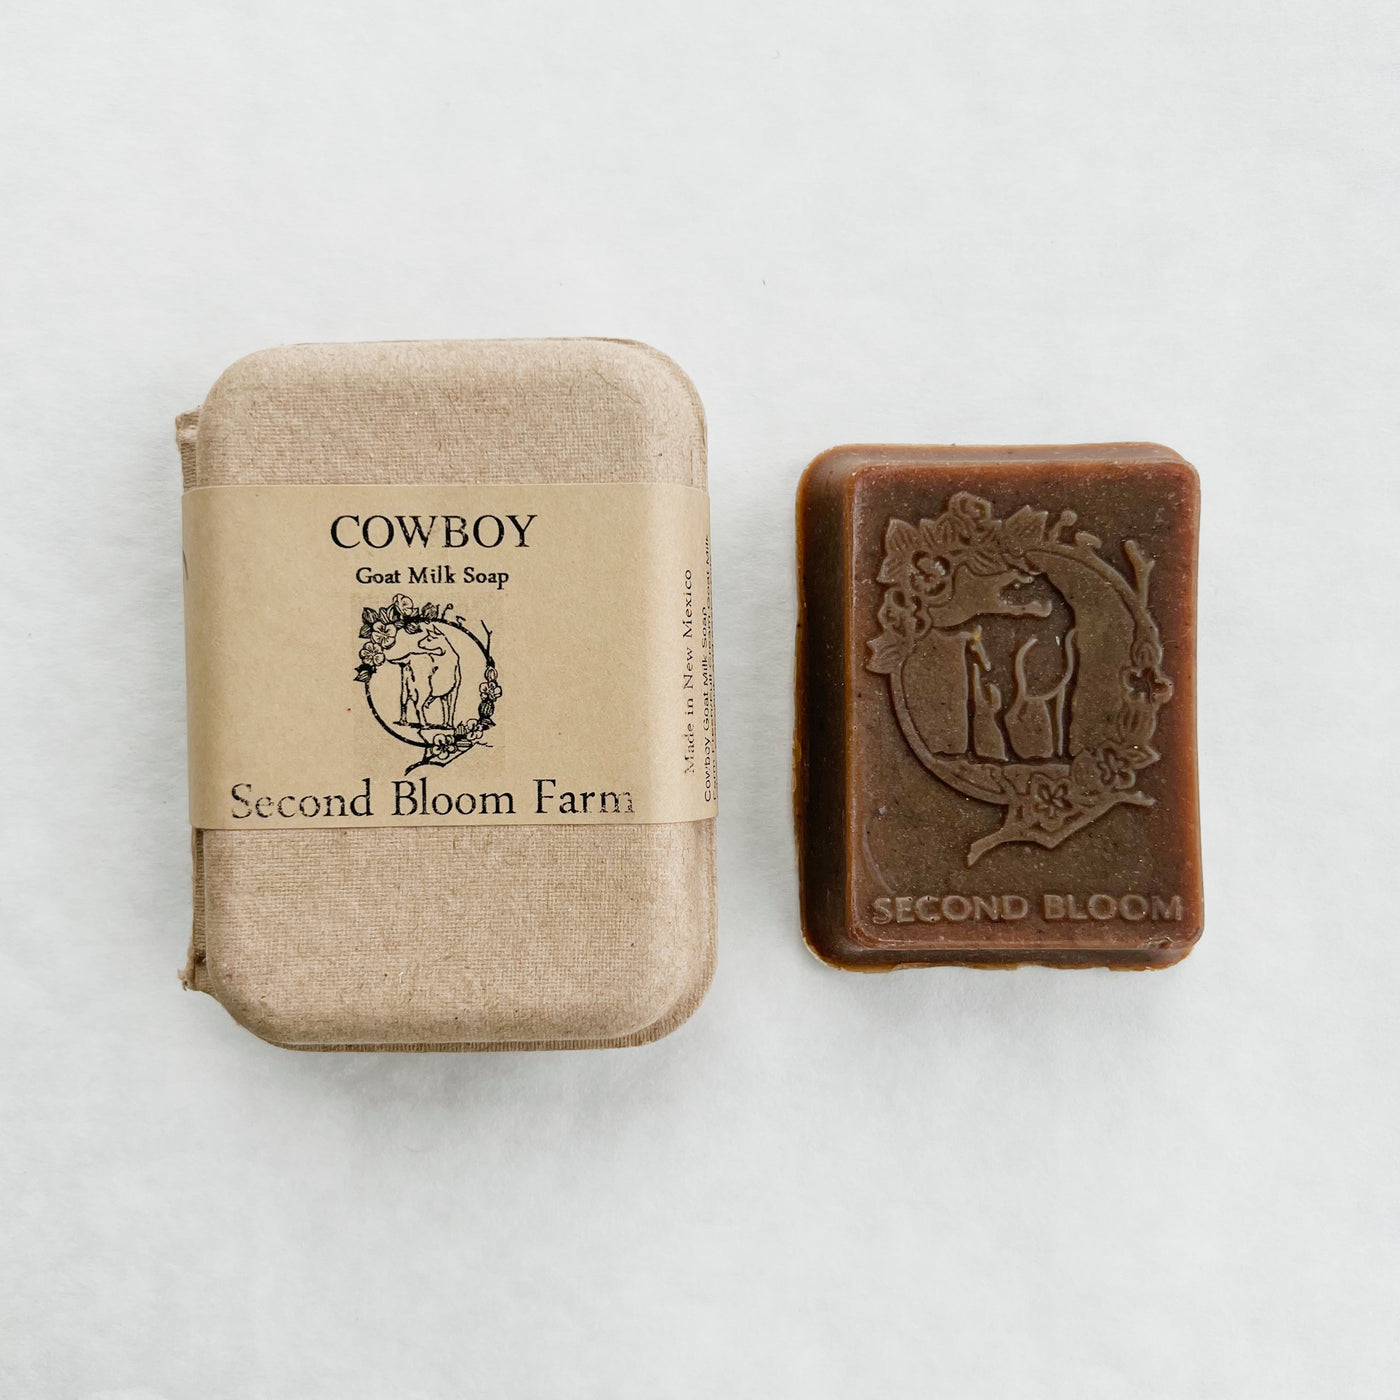 Cowboy Goat Milk Soap by Second Bloom Farm